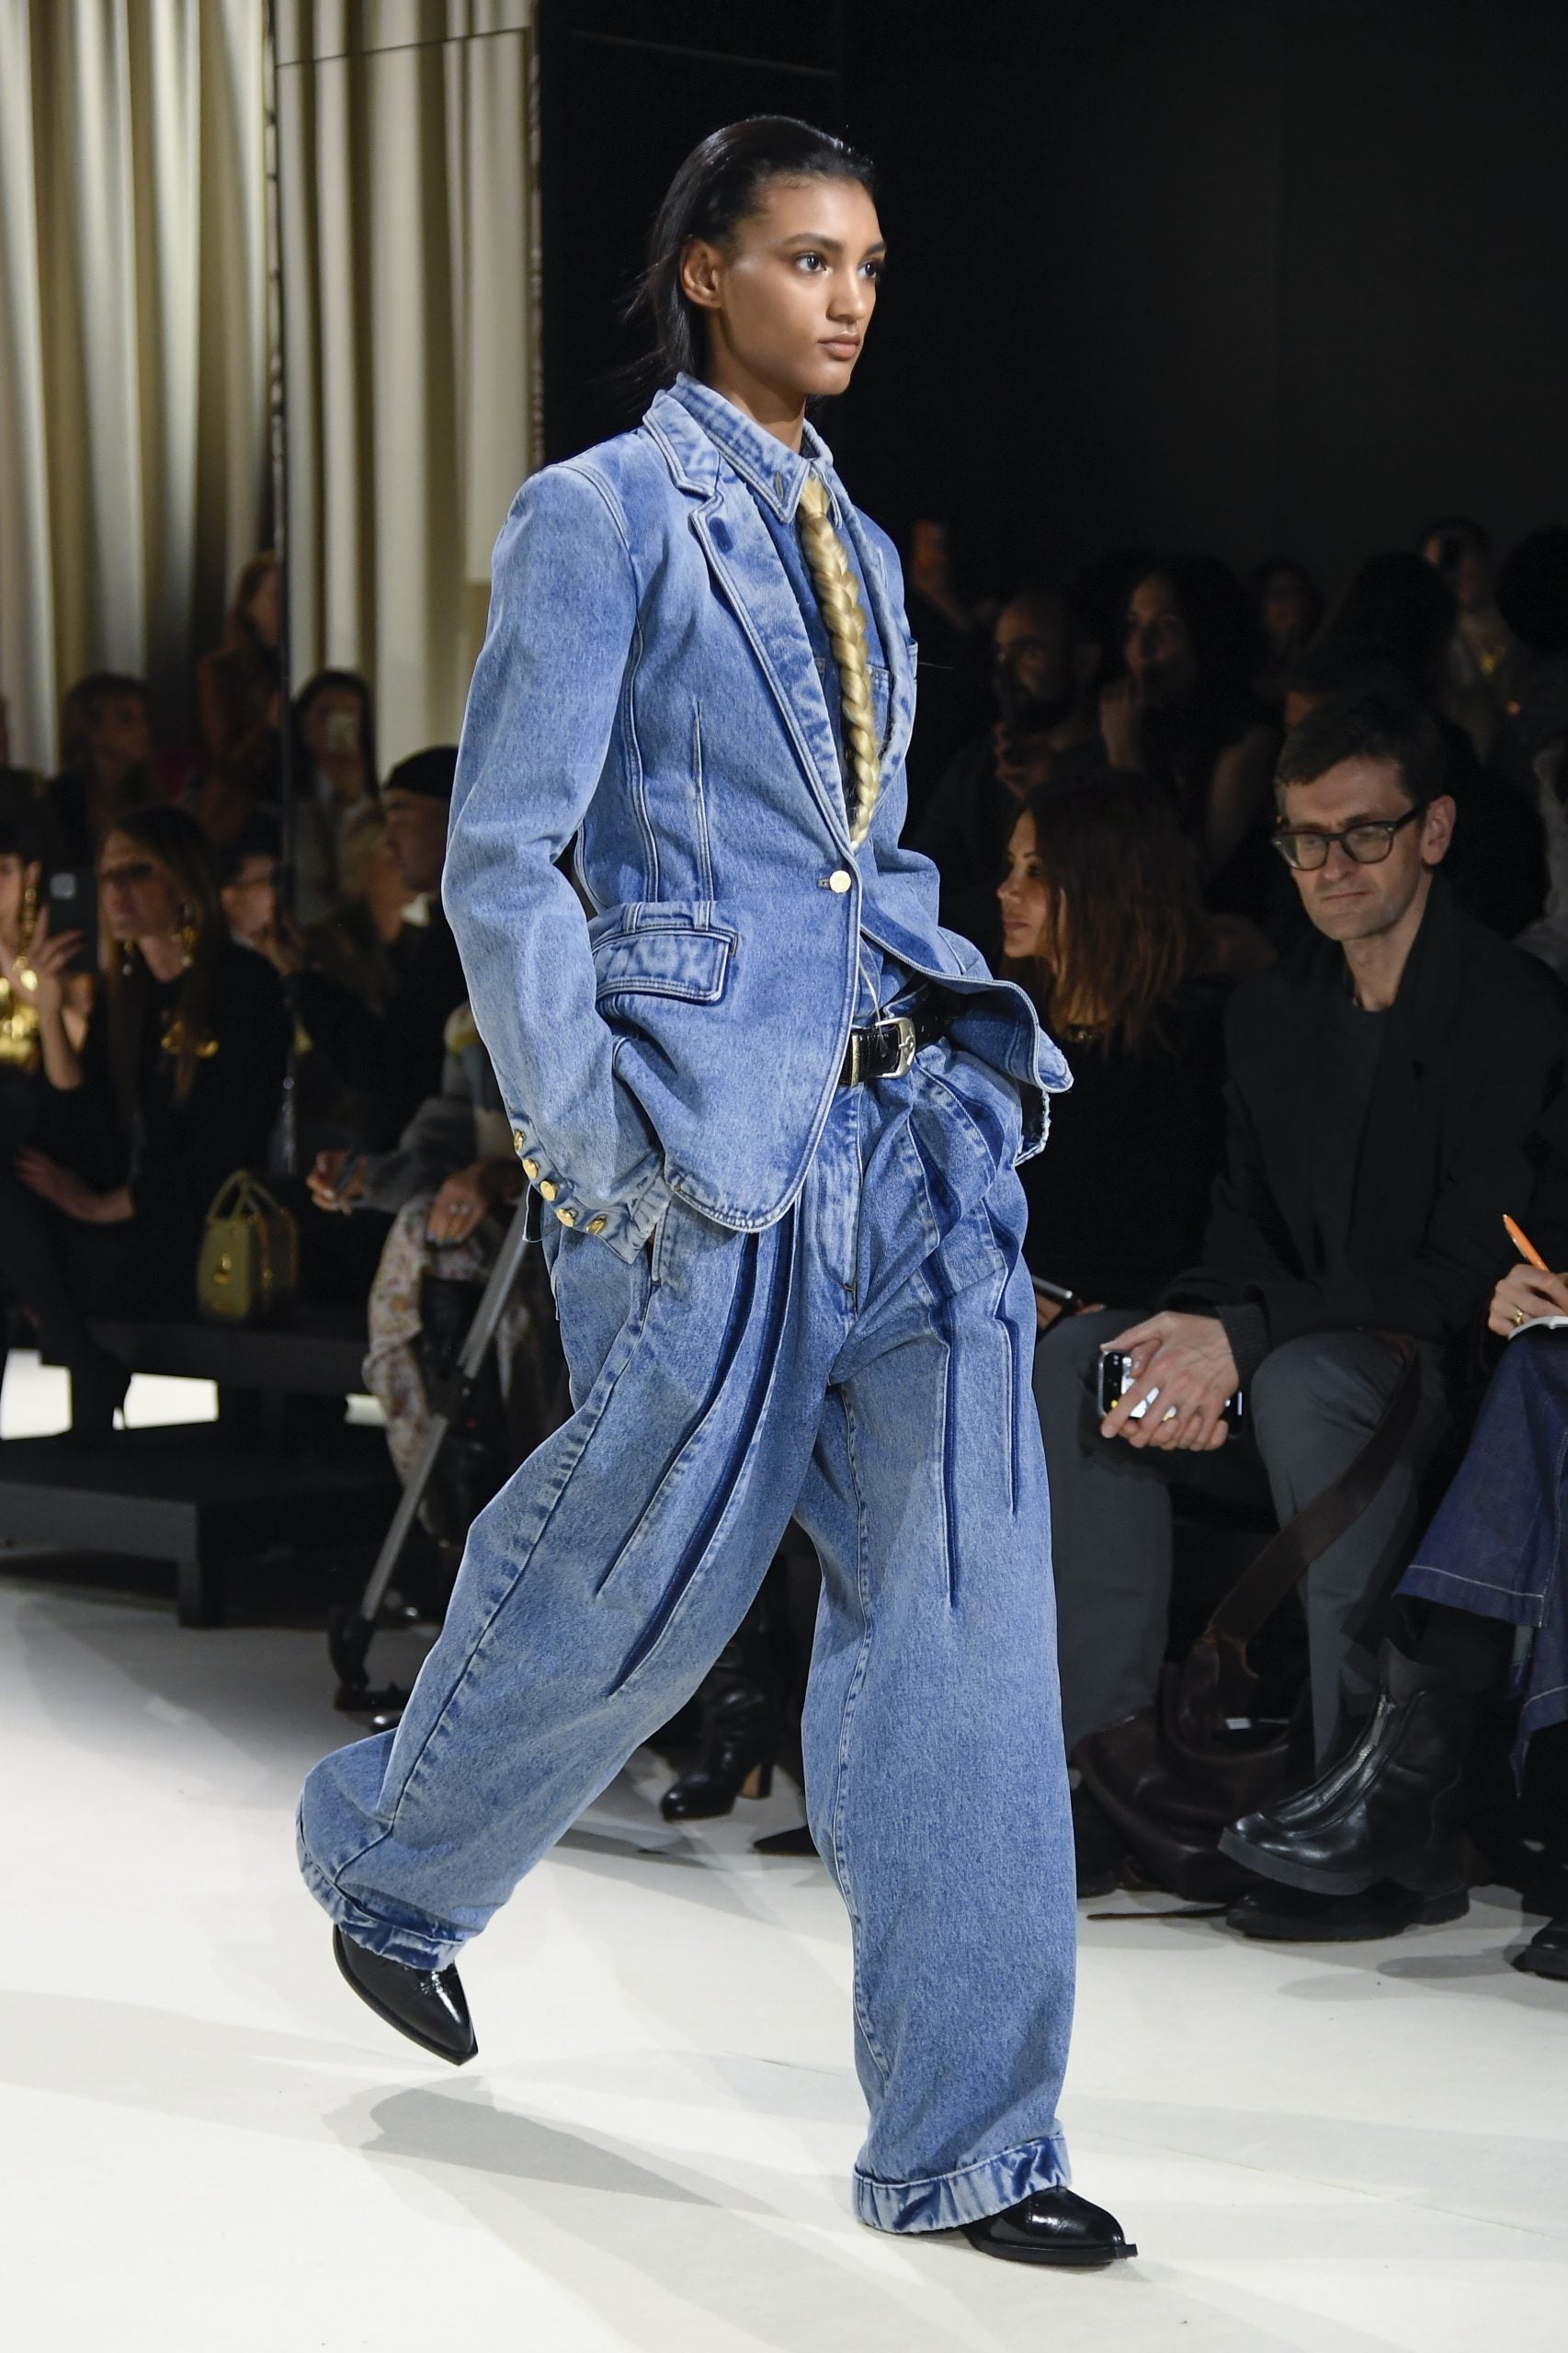 Essence Fashion Digest: Schiaparelli Reveals A Striking Collection, Lori Harvey Wears Ferragamo, And More